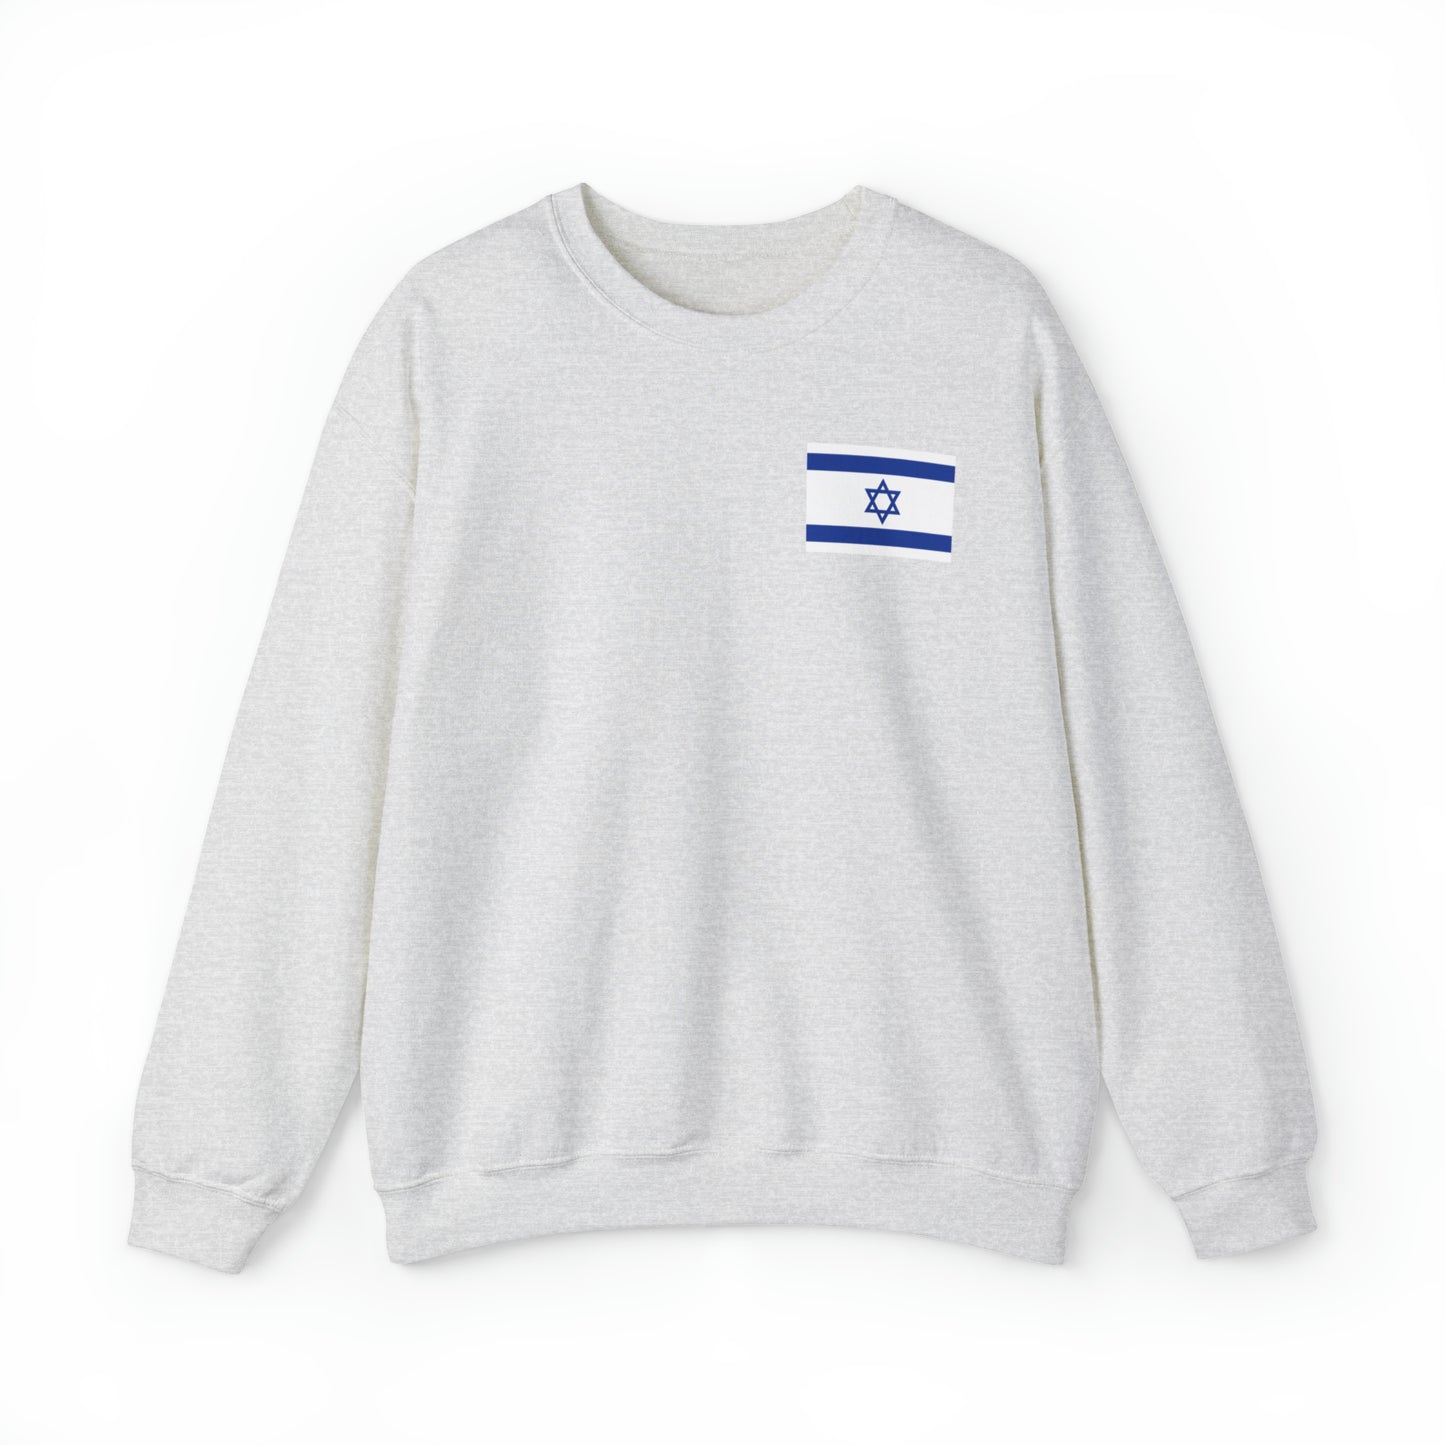 Israeli Flag We Stand For Israel Unisex Heavy Blend Crewneck Sweatshirt